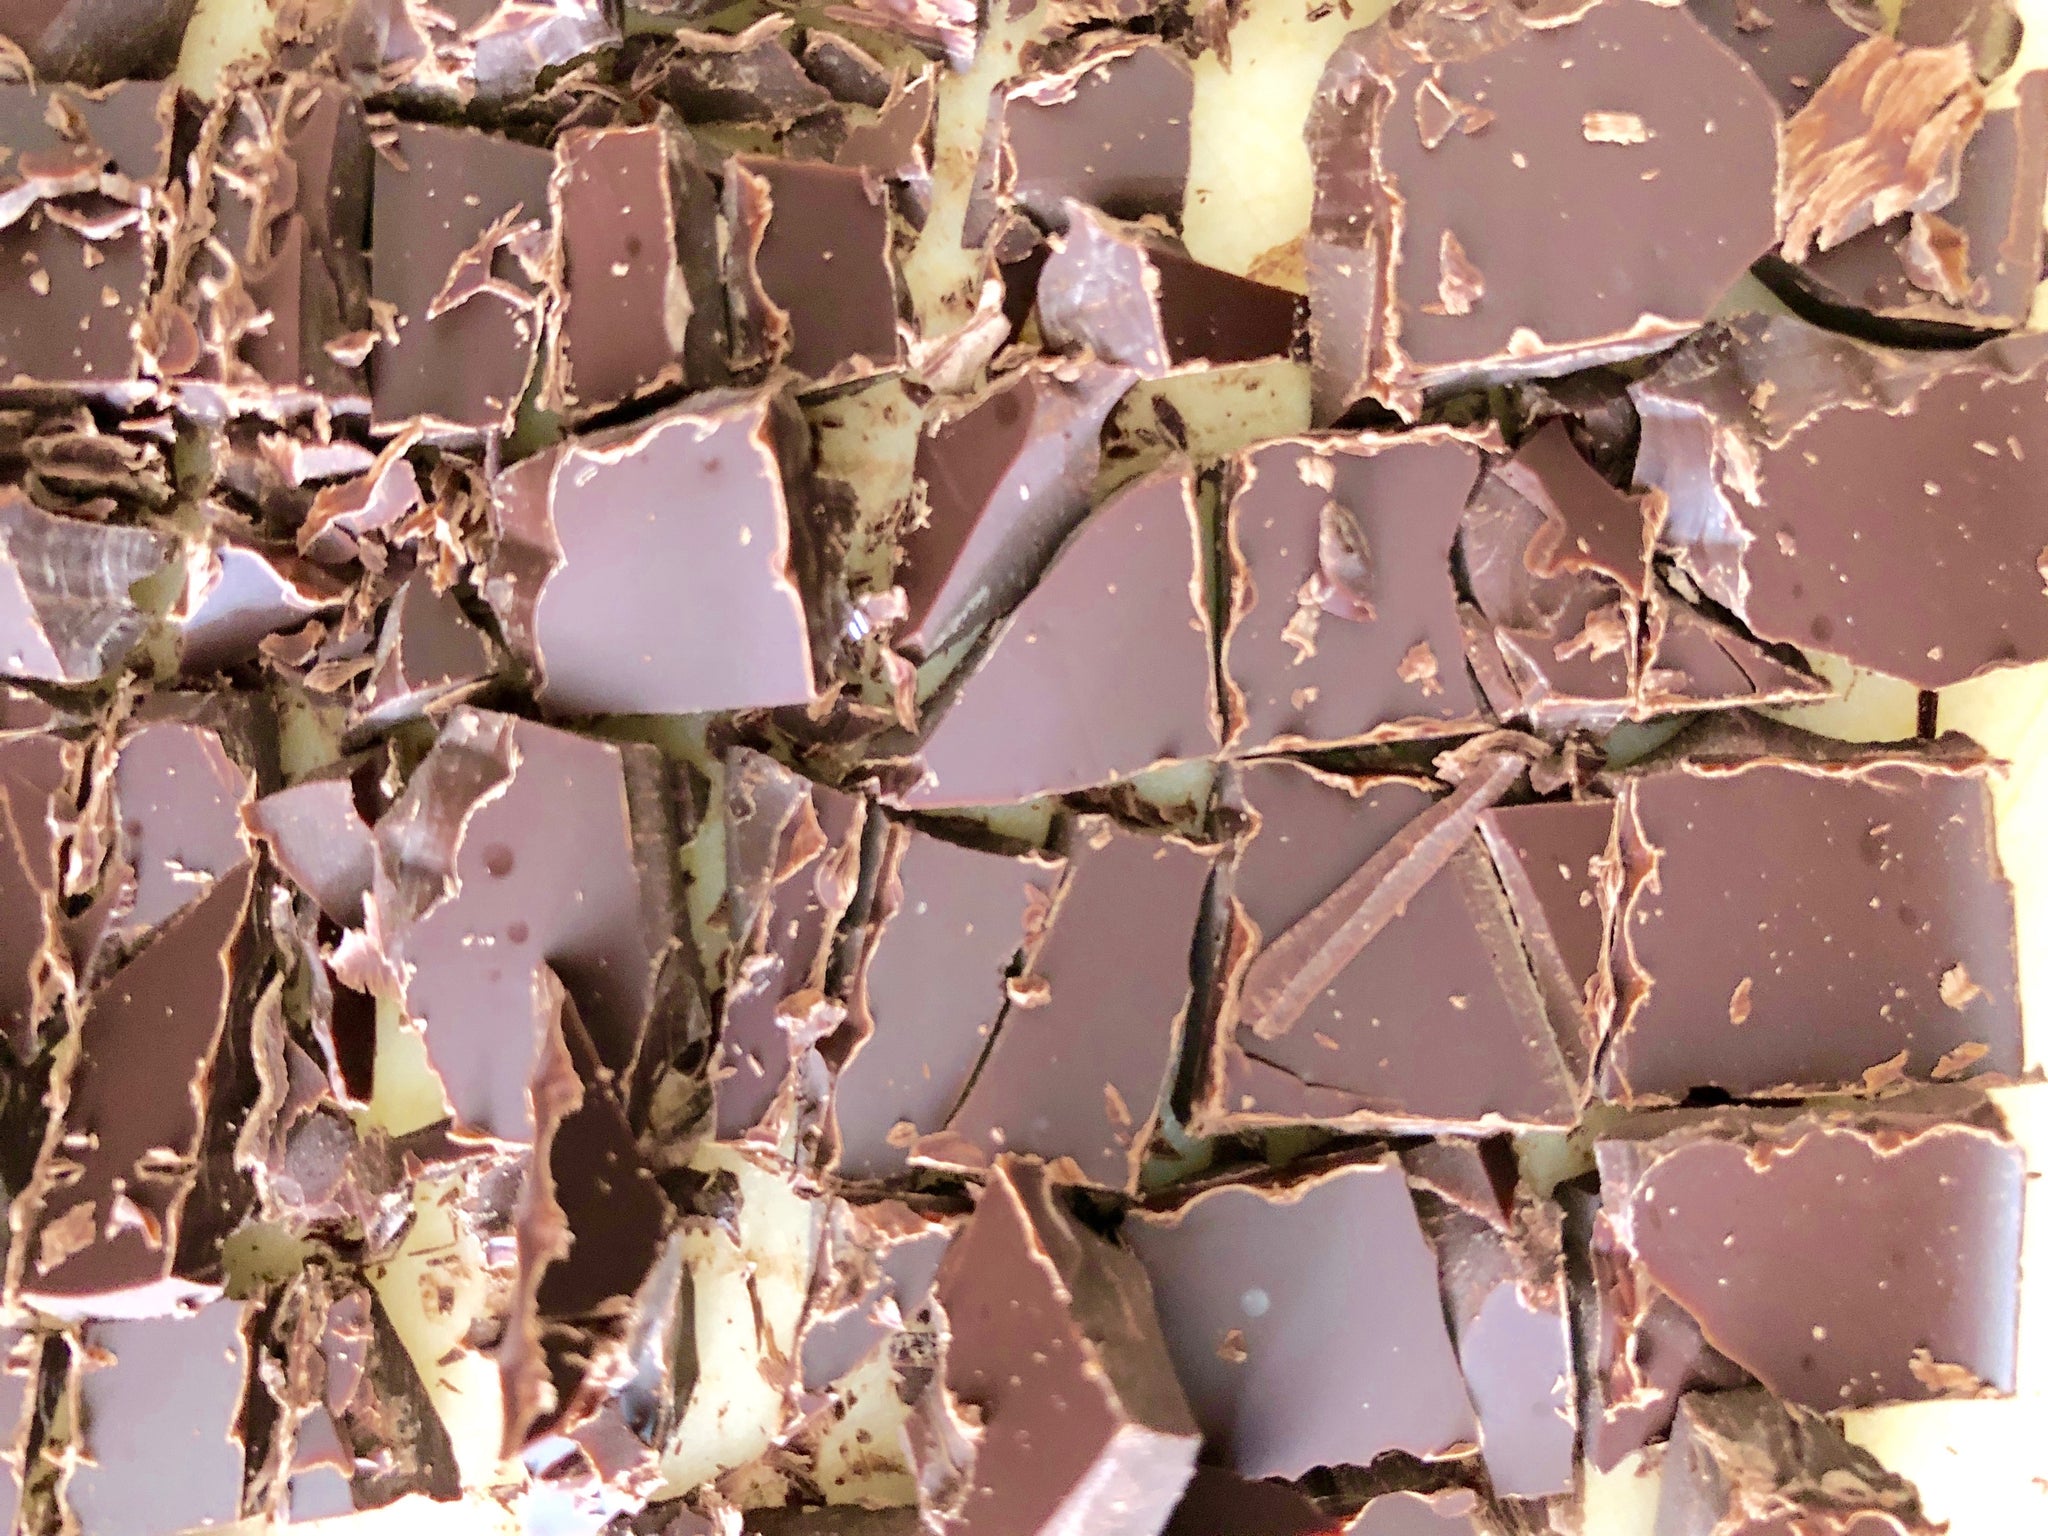 chocolate-chunks